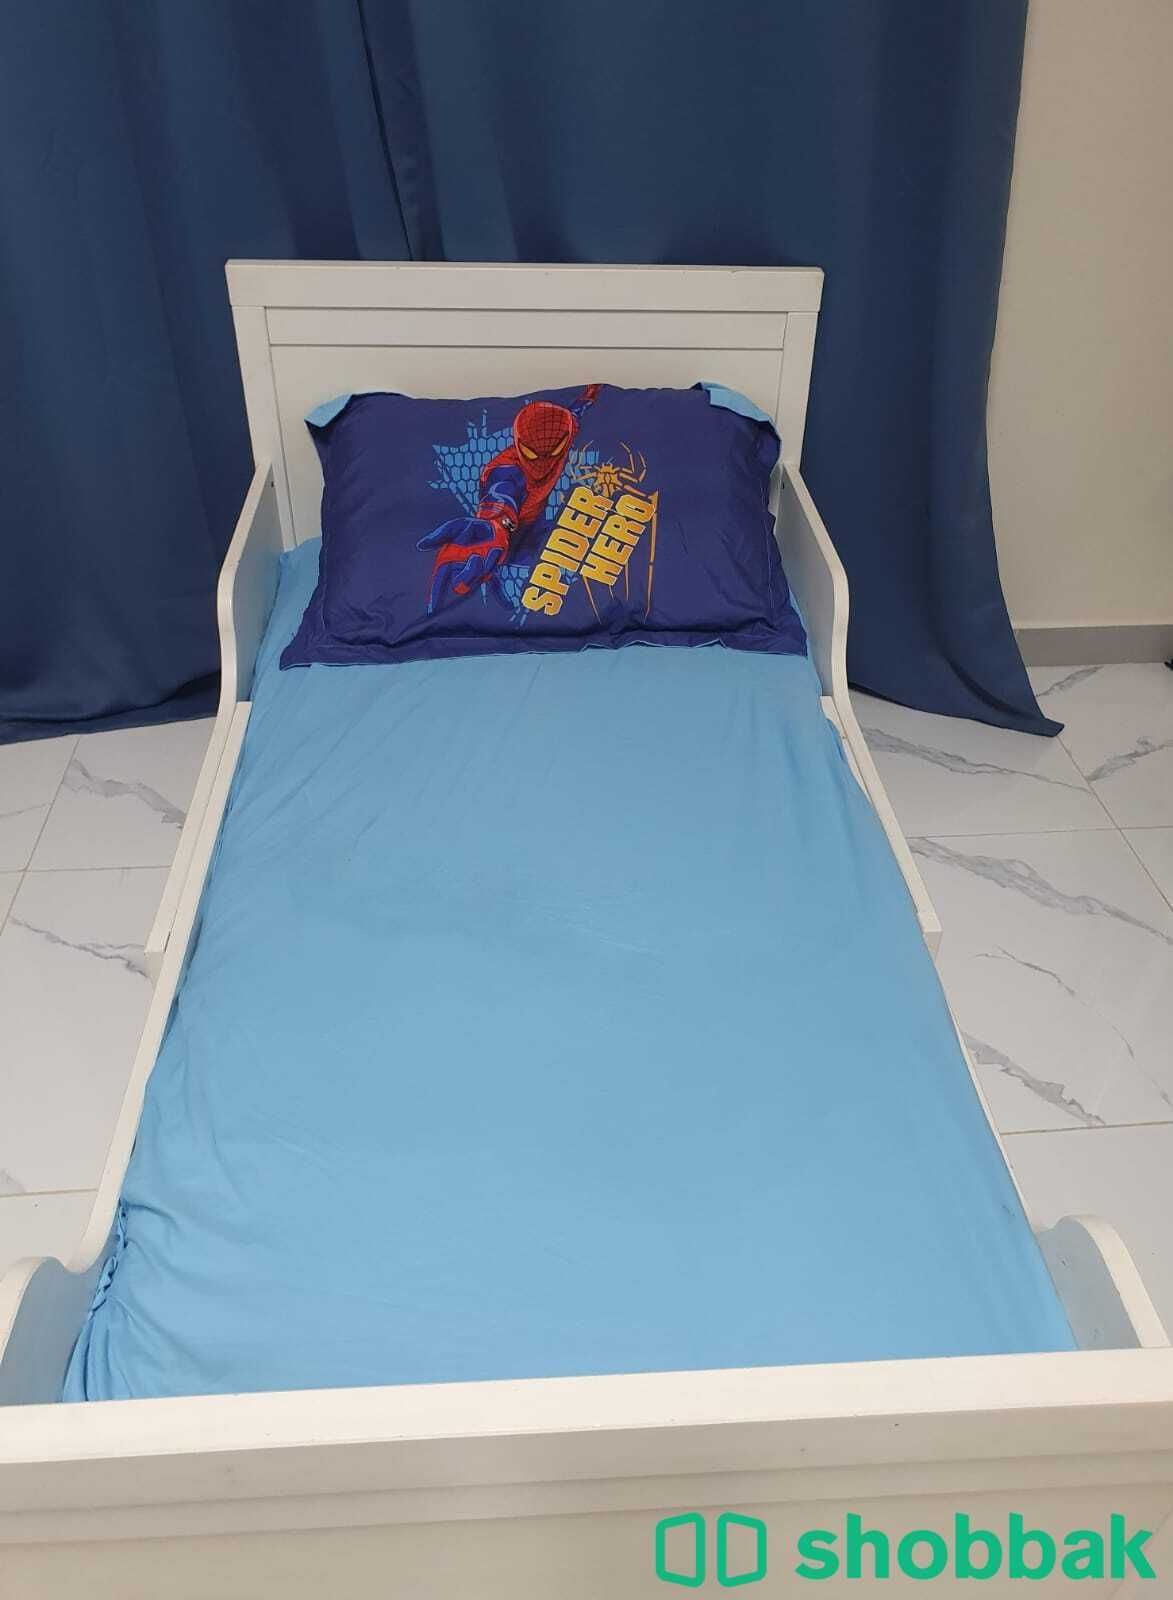 سرير ايكيا للاطفال قابل للتطويل 200cm*80cm Shobbak Saudi Arabia